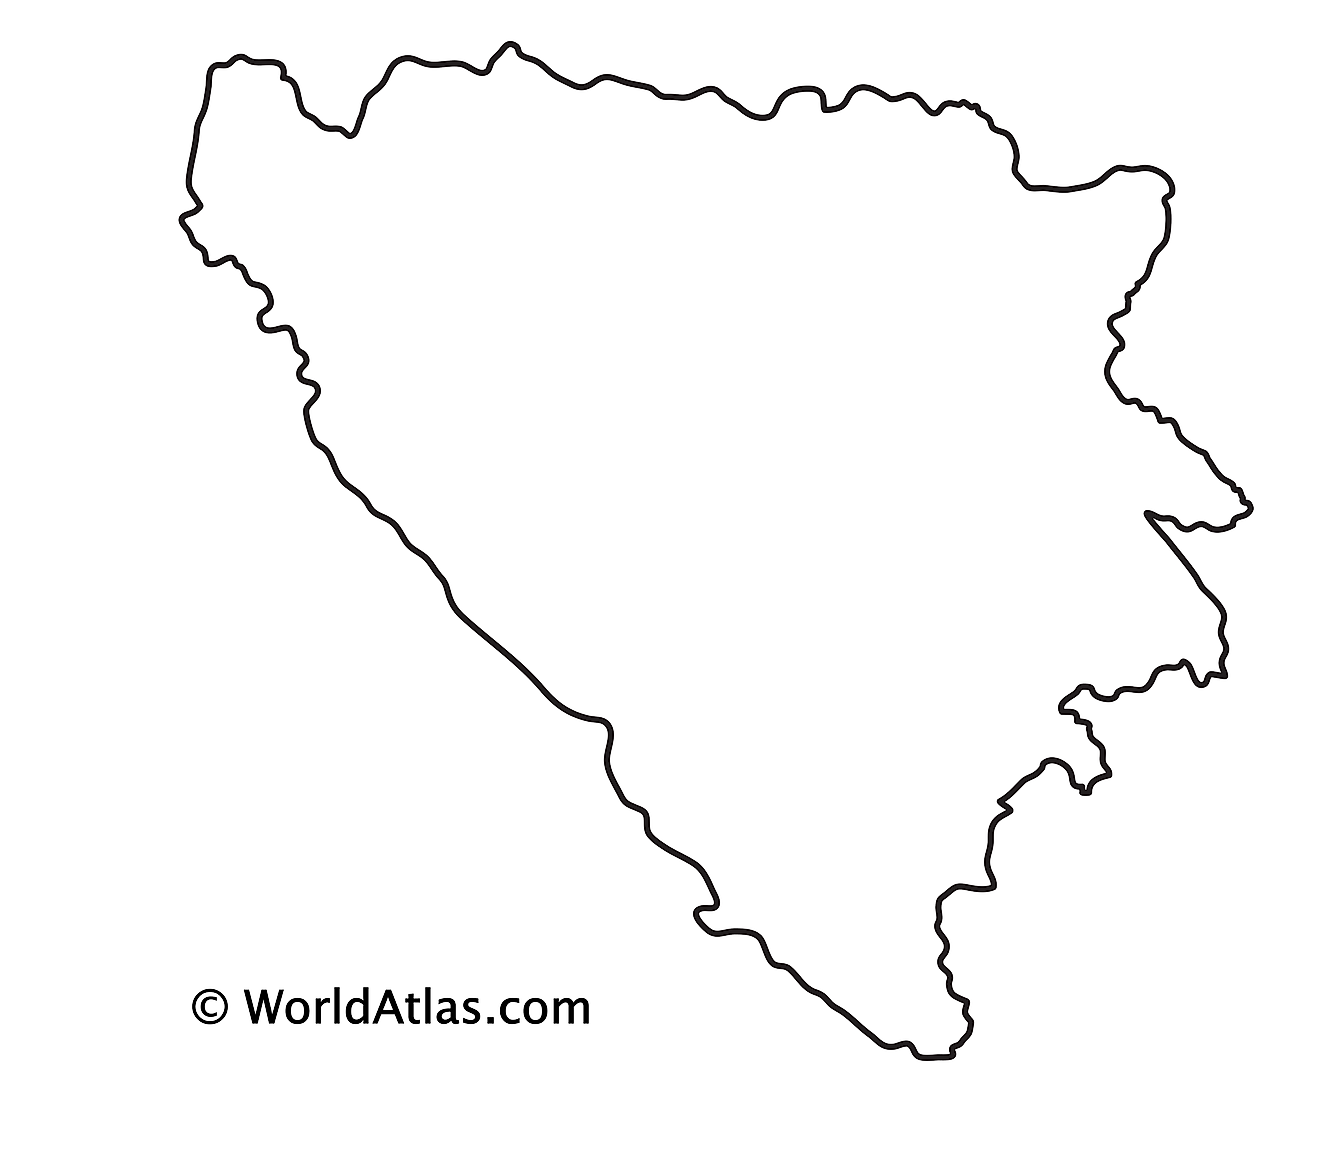 Blank Outline Map of Bosnia and Herzegovina